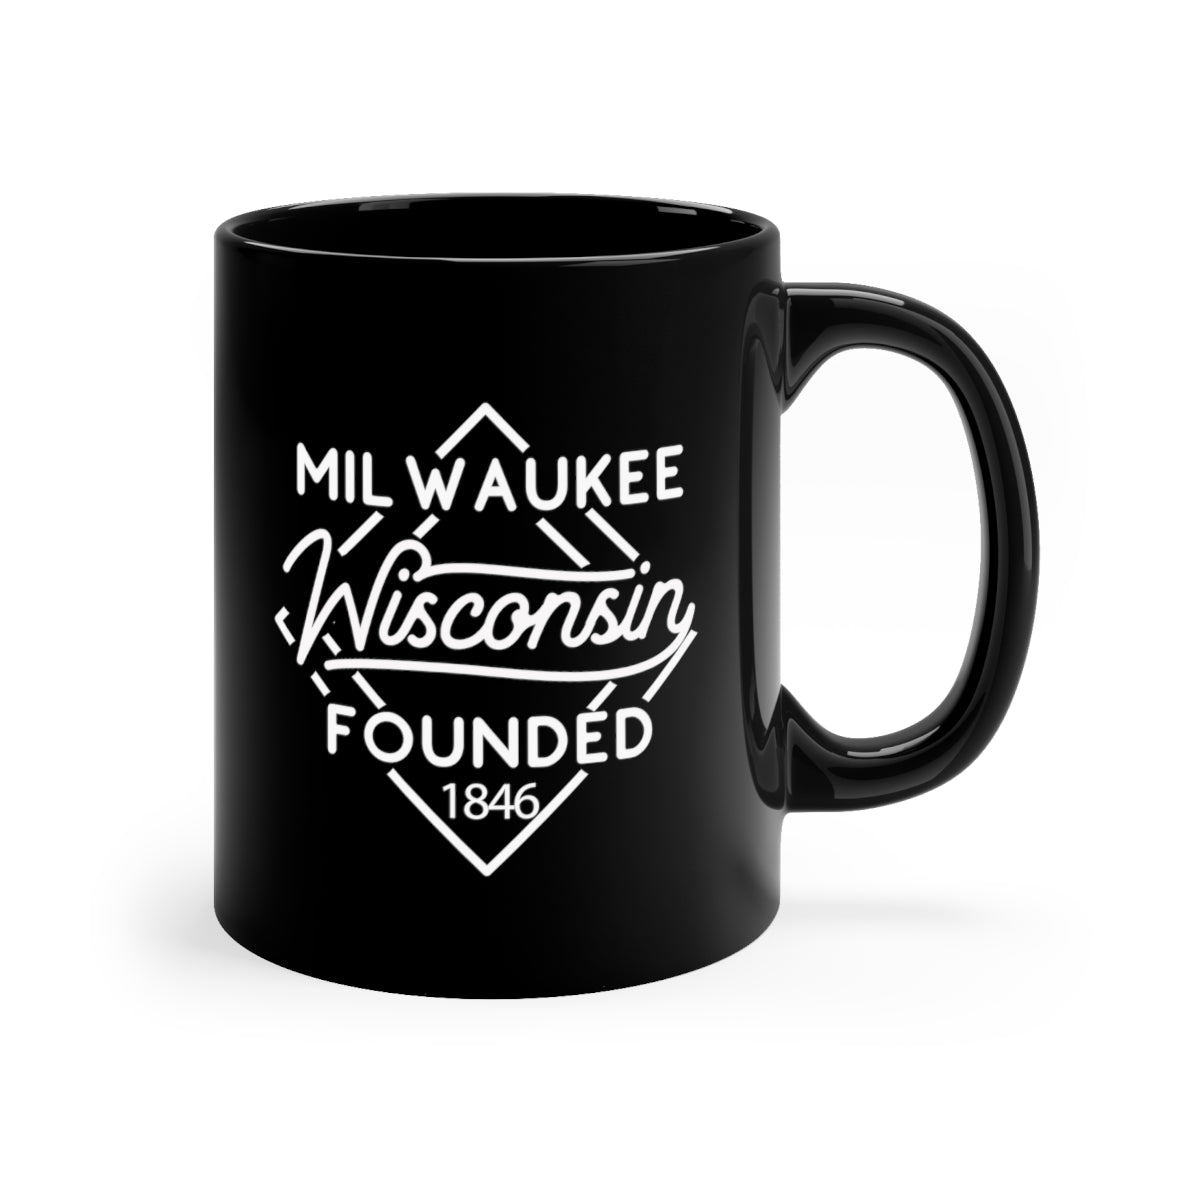 11oz black ceramic mug for Milwaukee, Wisconsin Side view